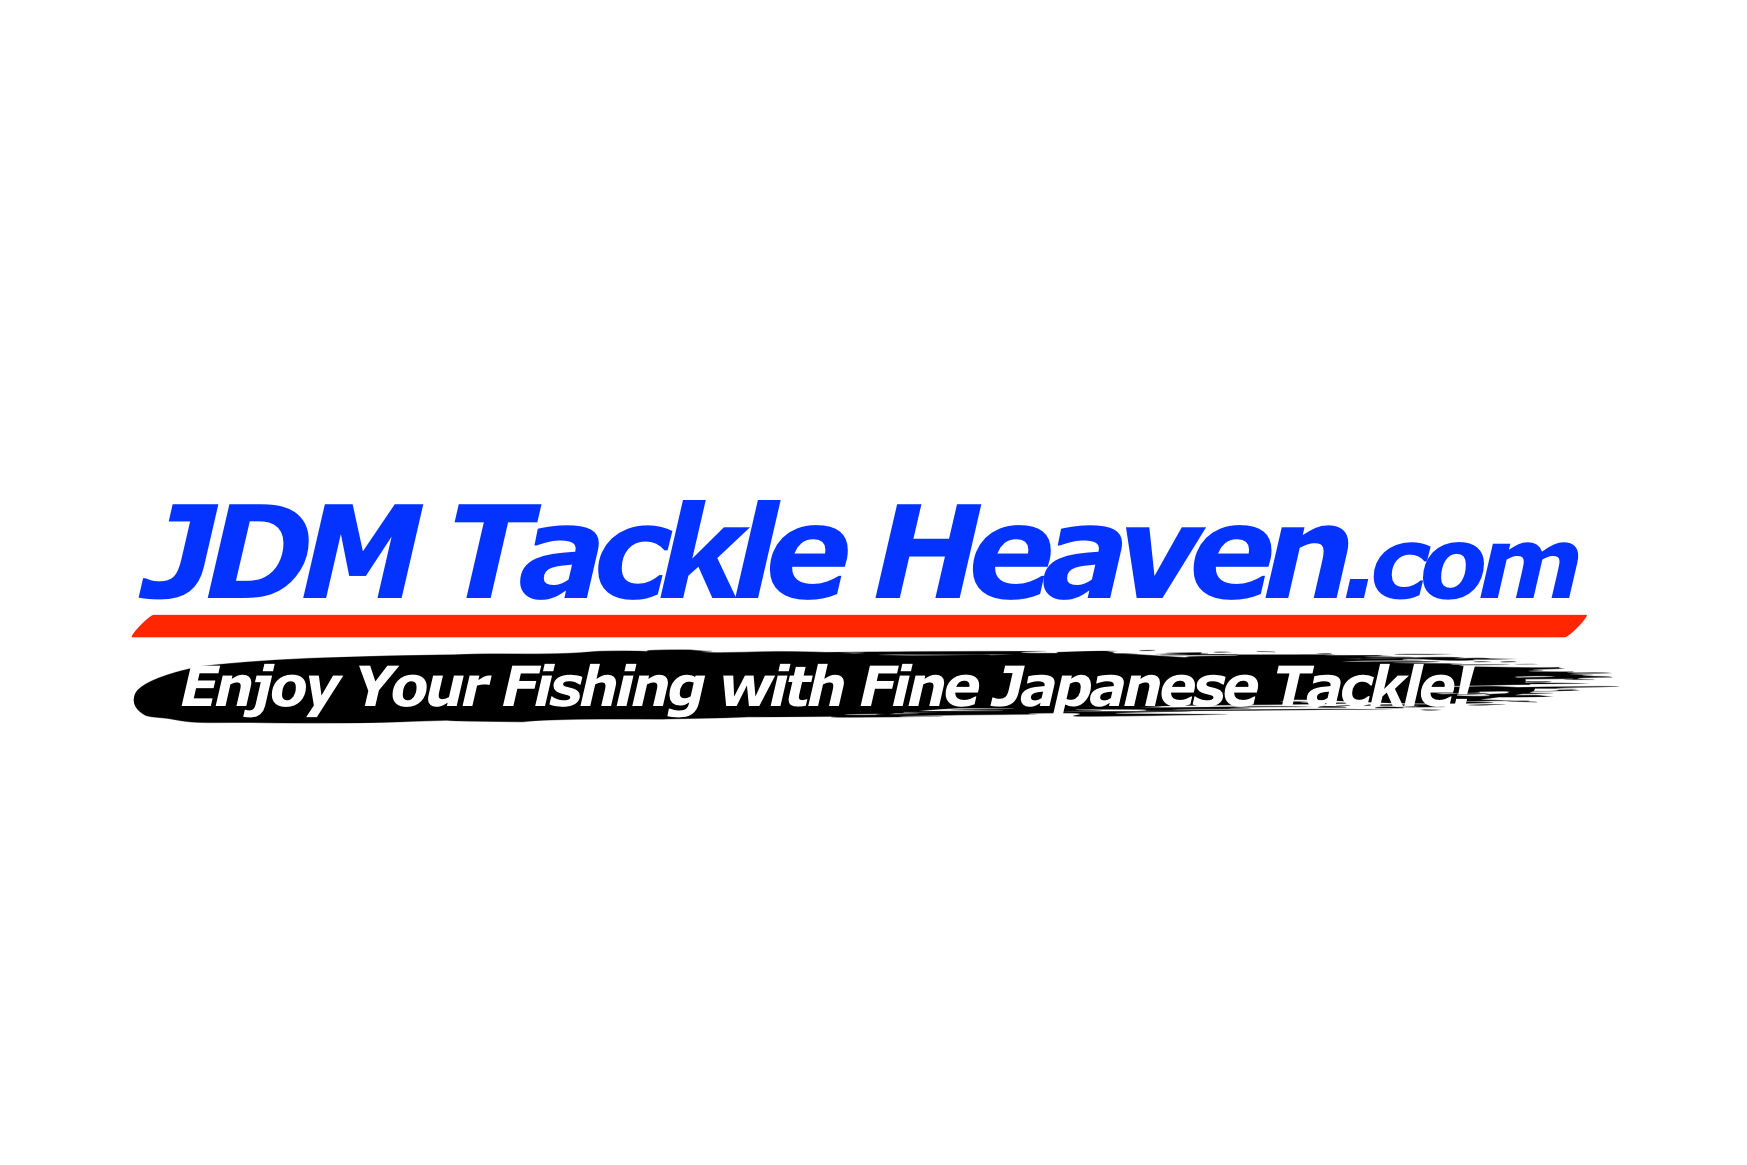 TENRYU HORIZON SL FISHING ROD (MADE IN JAPAN)